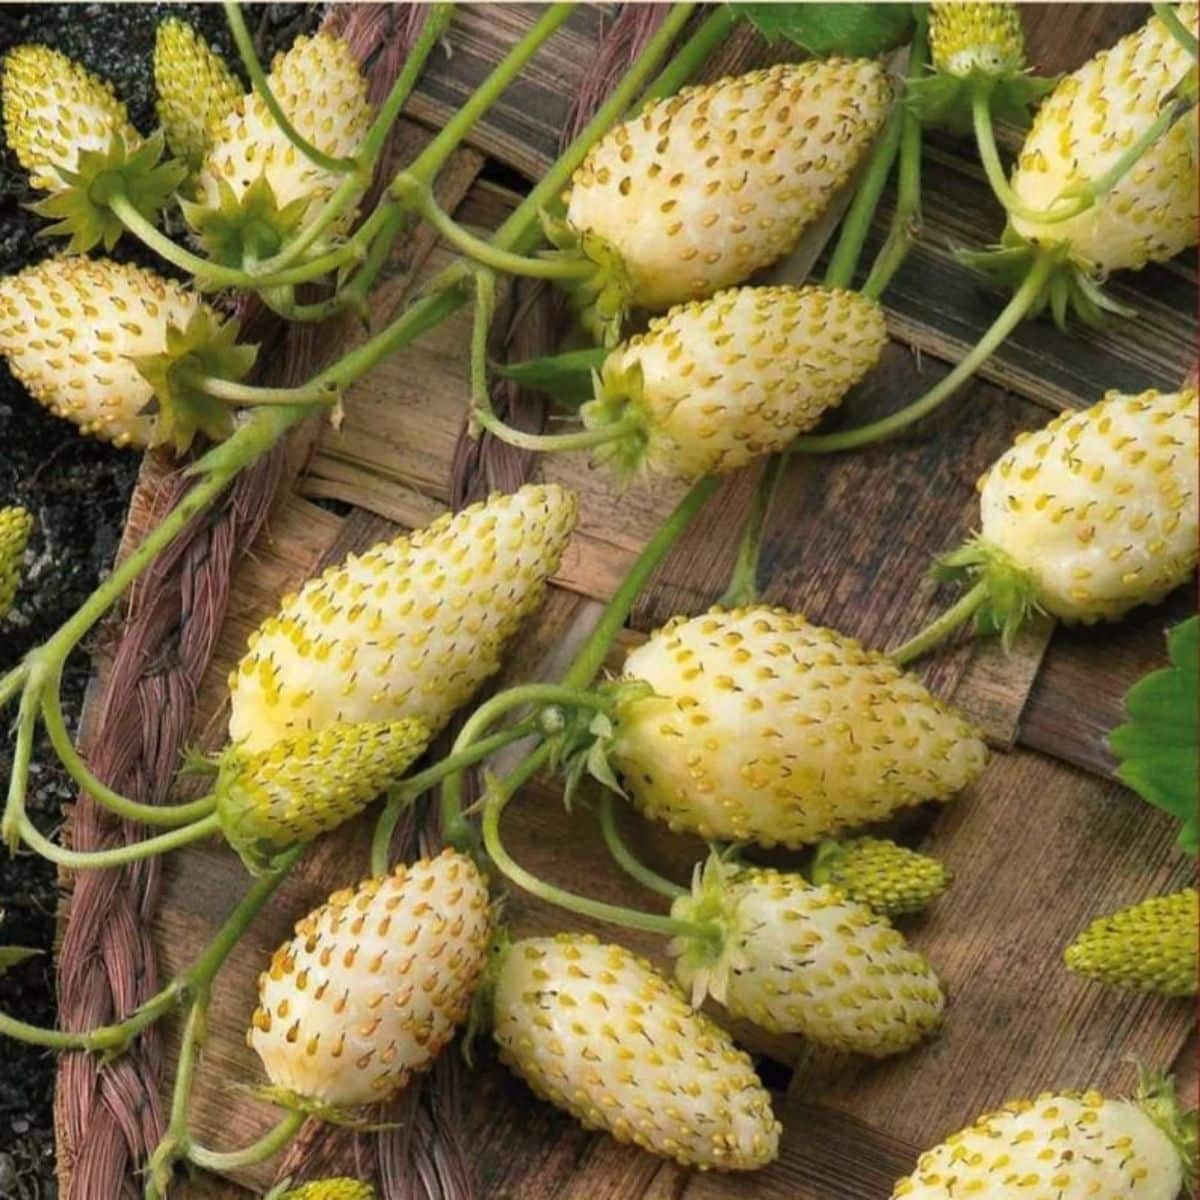 Ripe fruits of alpine yellow wonder strawberry variety.